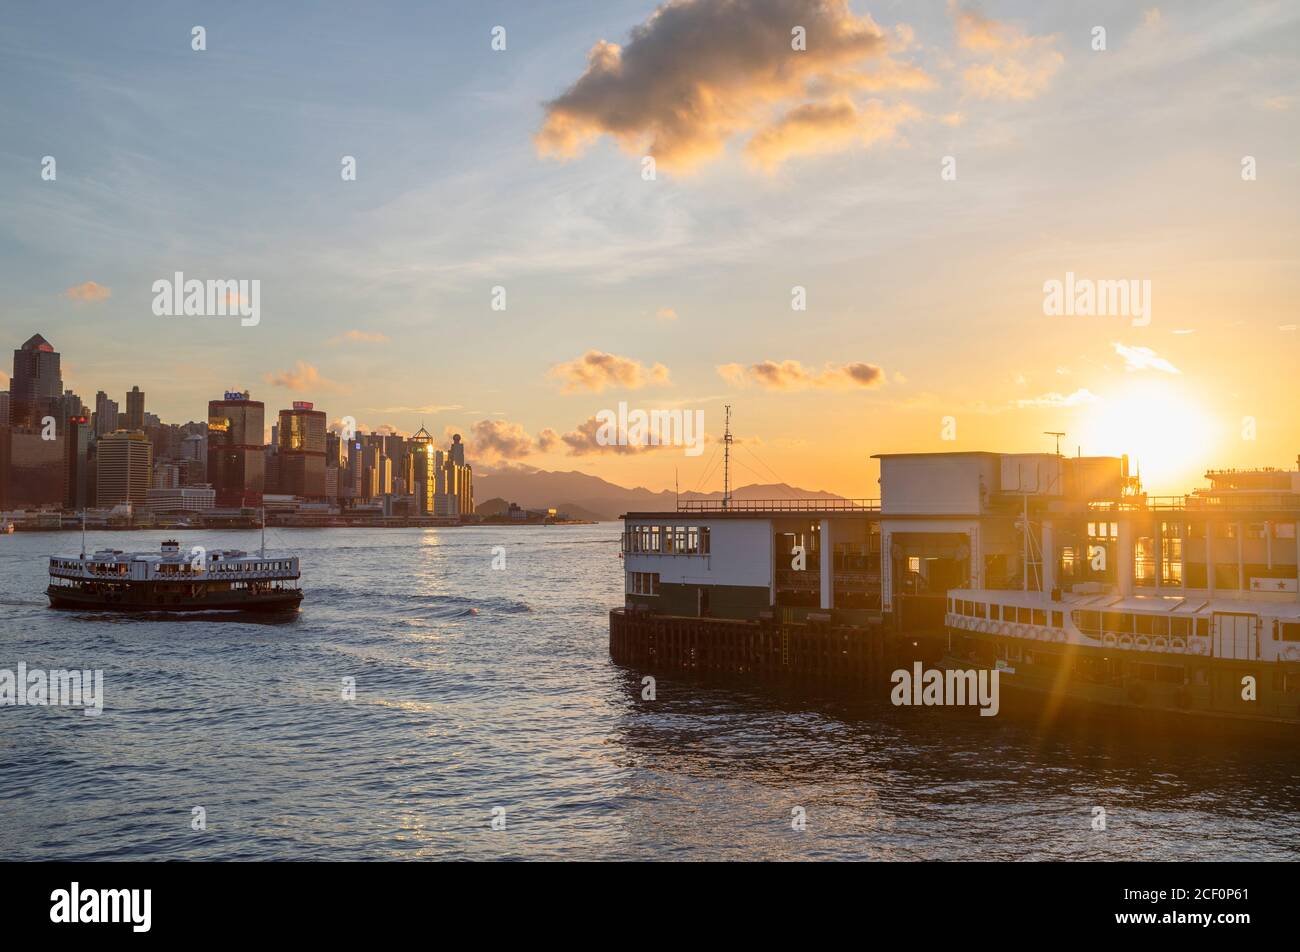 Star Ferry approchant de Star Ferry Pier au coucher du soleil, Tsim Sha Tsui, Kowloon, Hong Kong Banque D'Images